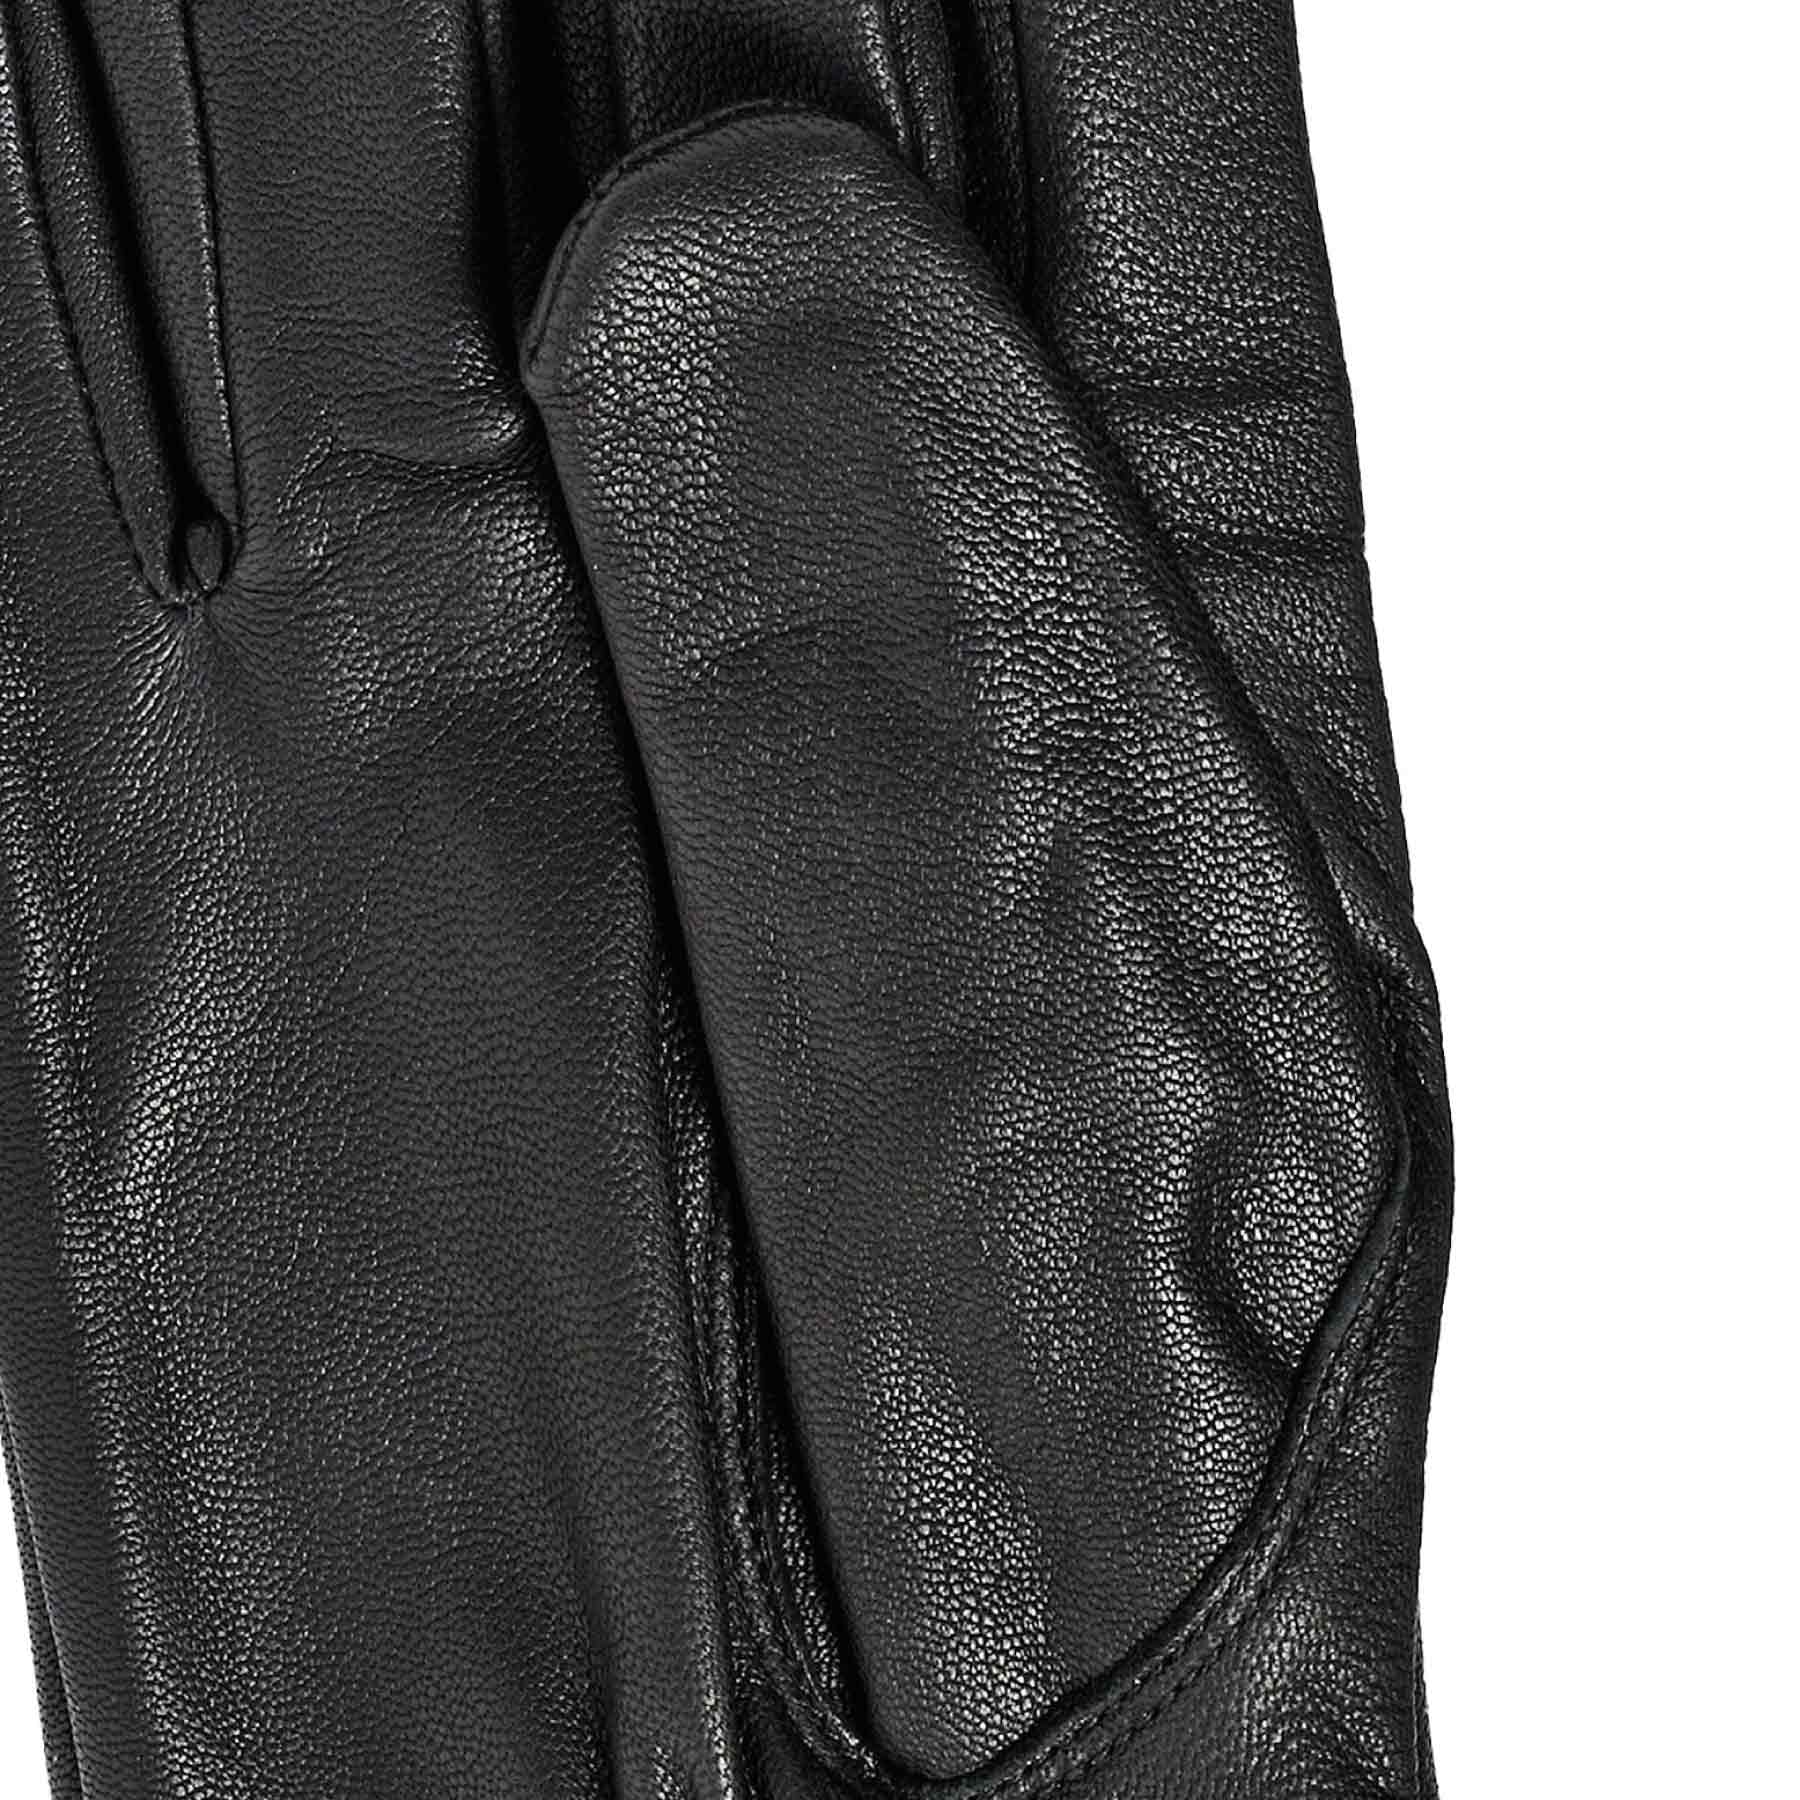 Gloves M1 Leather Black